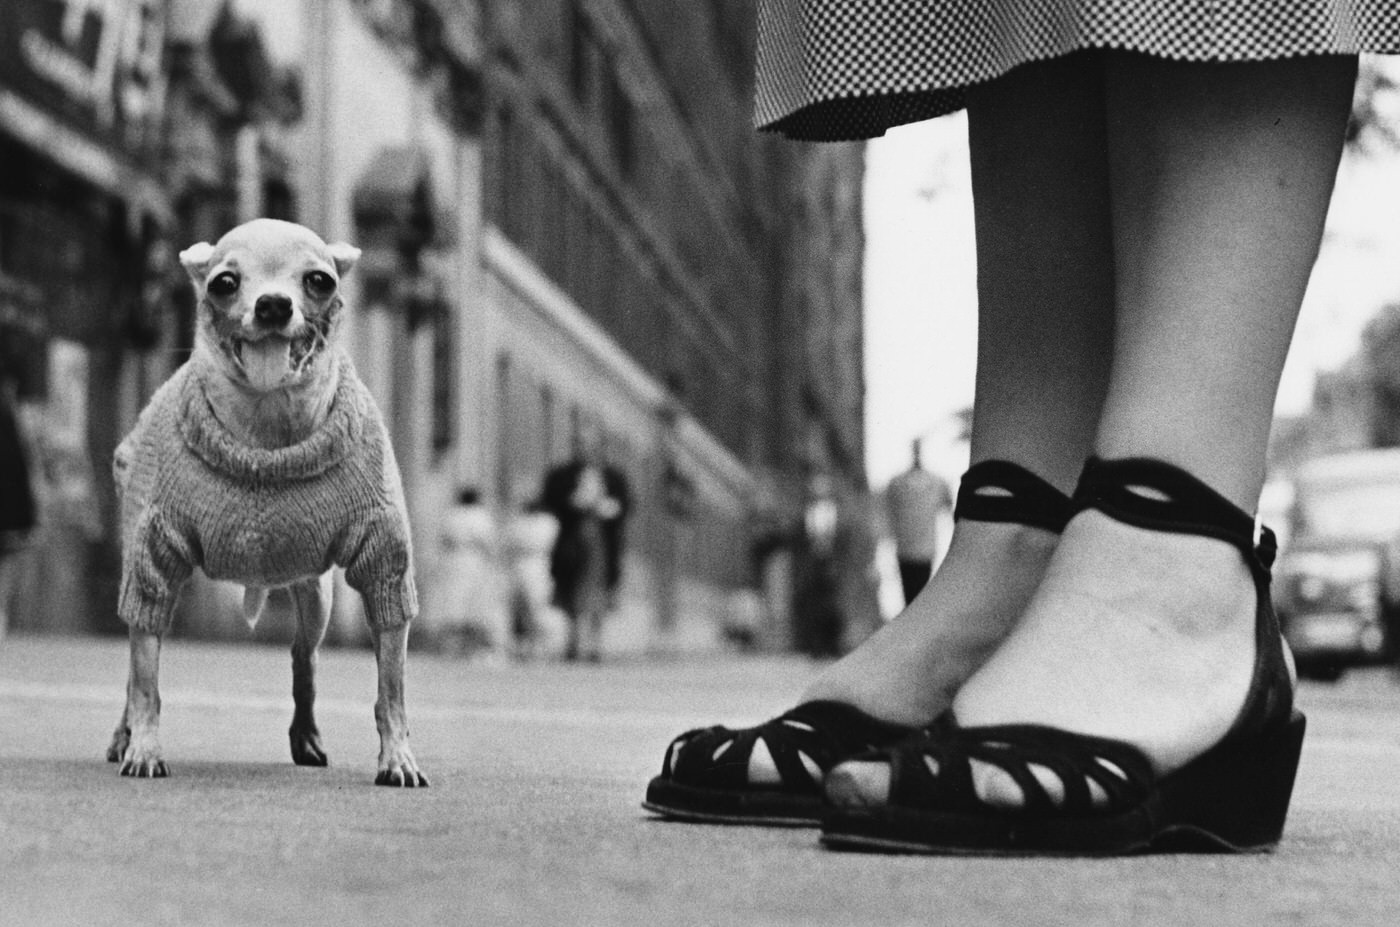 New York City, 1946